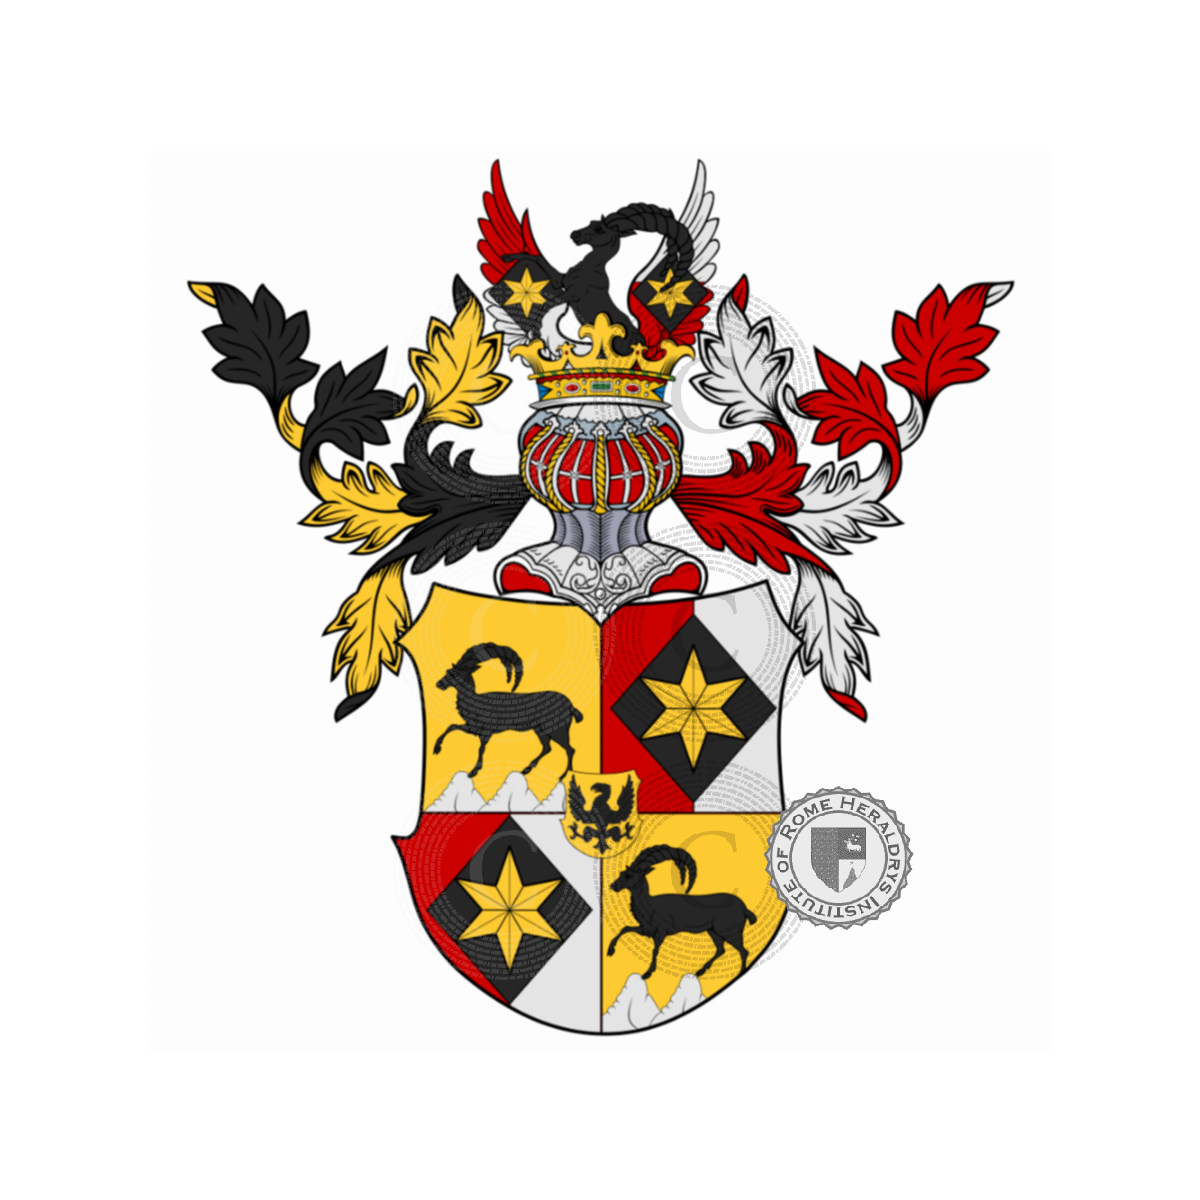 Escudo de la familiaKofler, Koffler,von Koflern